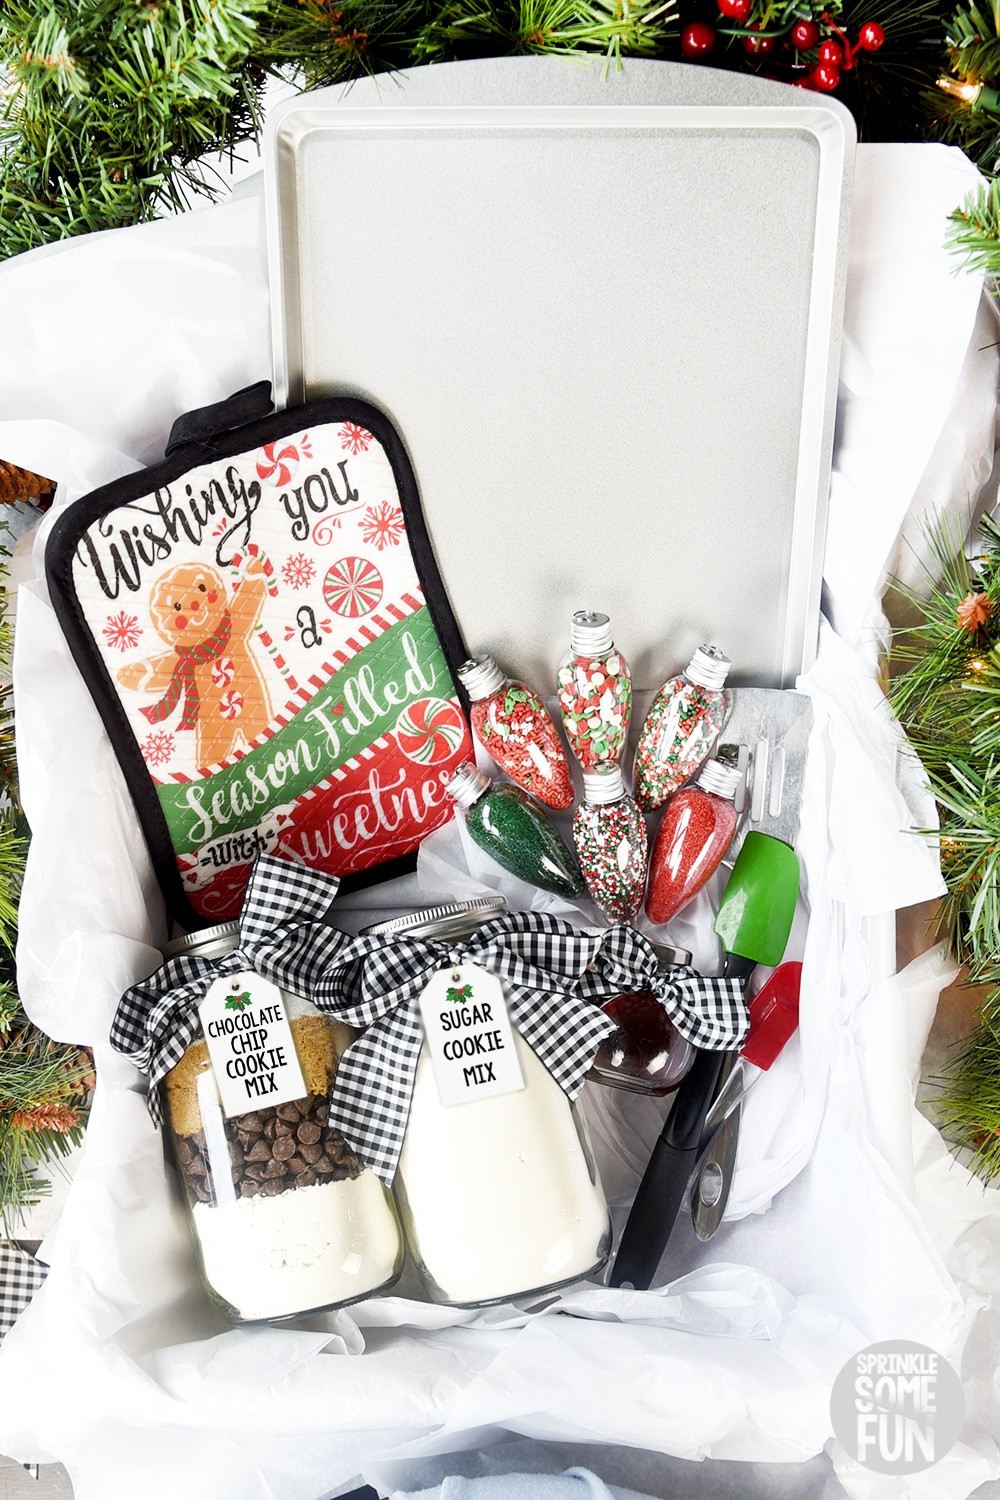 Christmas Baking Gift Ideas
 Christmas Cookie Kit ⋆ Baking Gift ⋆ Sprinkle Some Fun